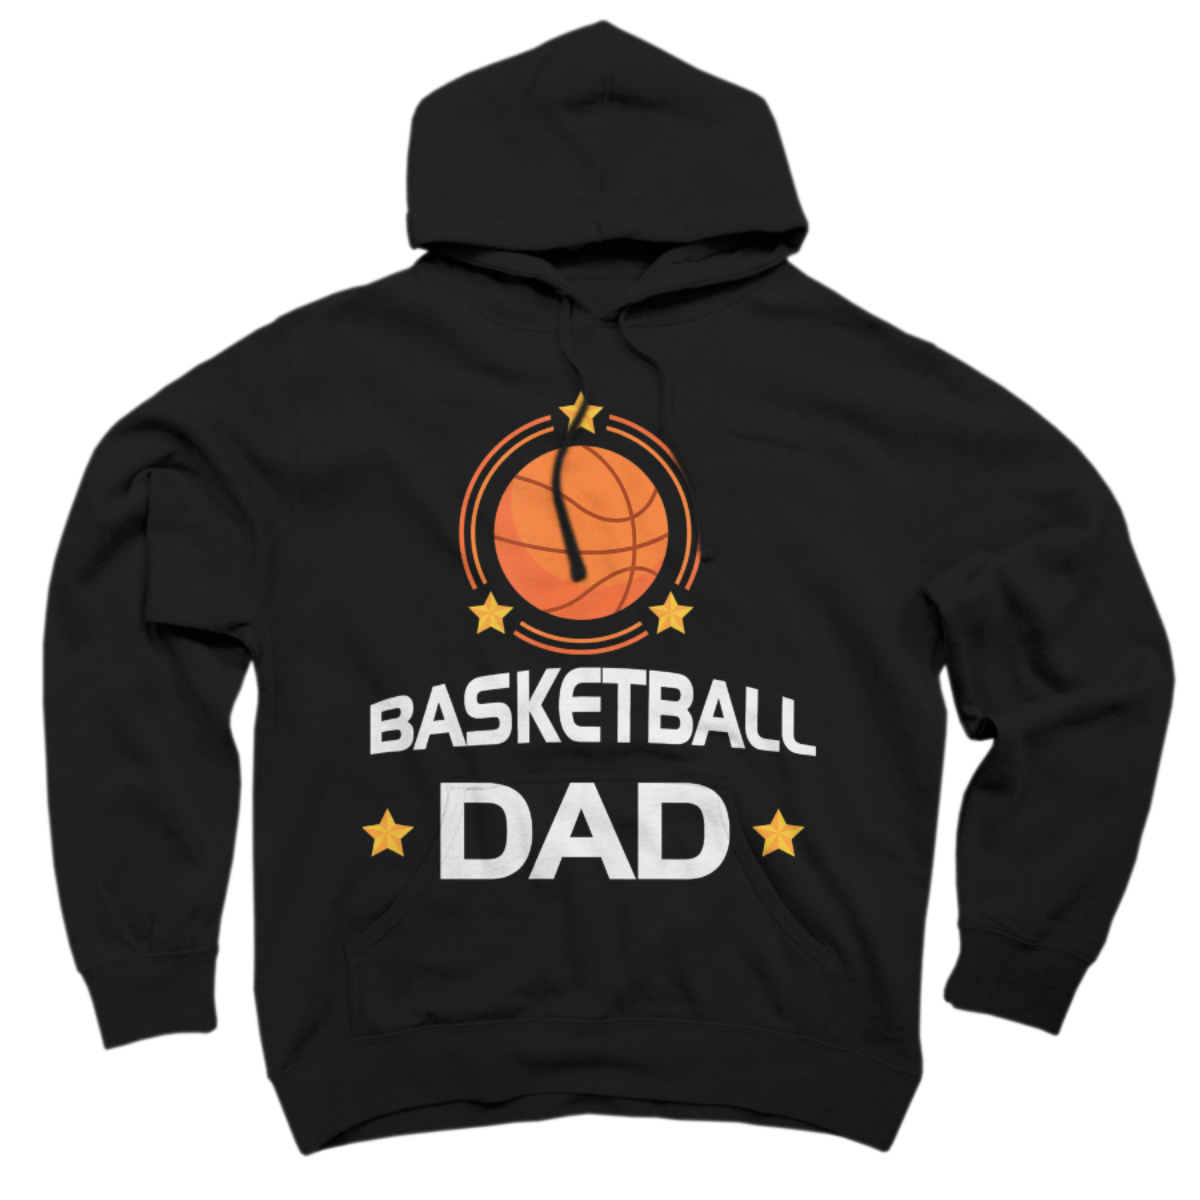 dad basketball shirt